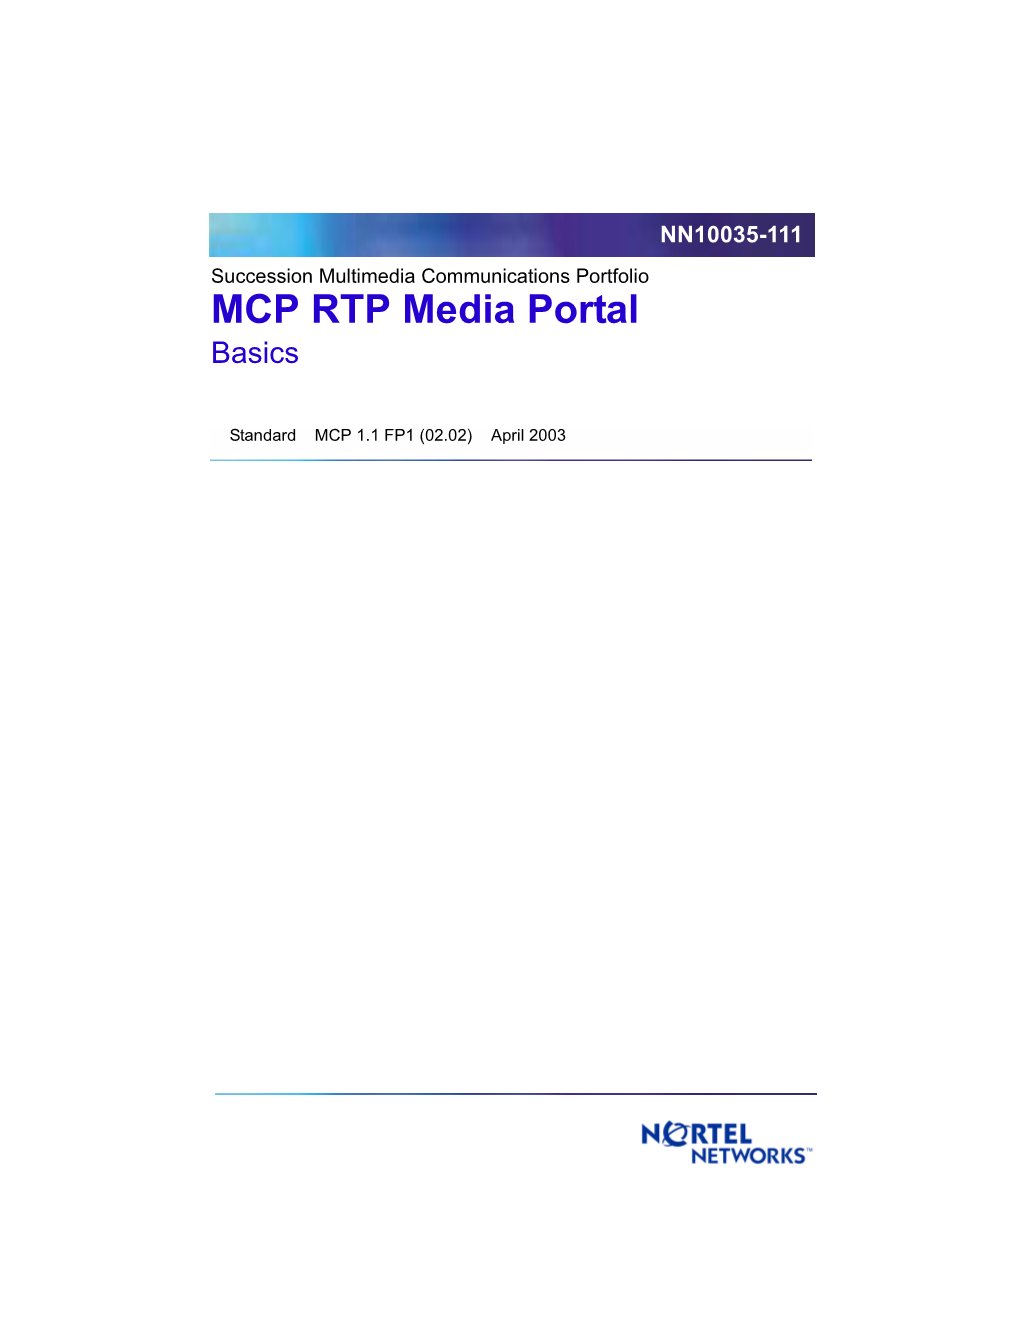 MCP RTP Media Portal Basics